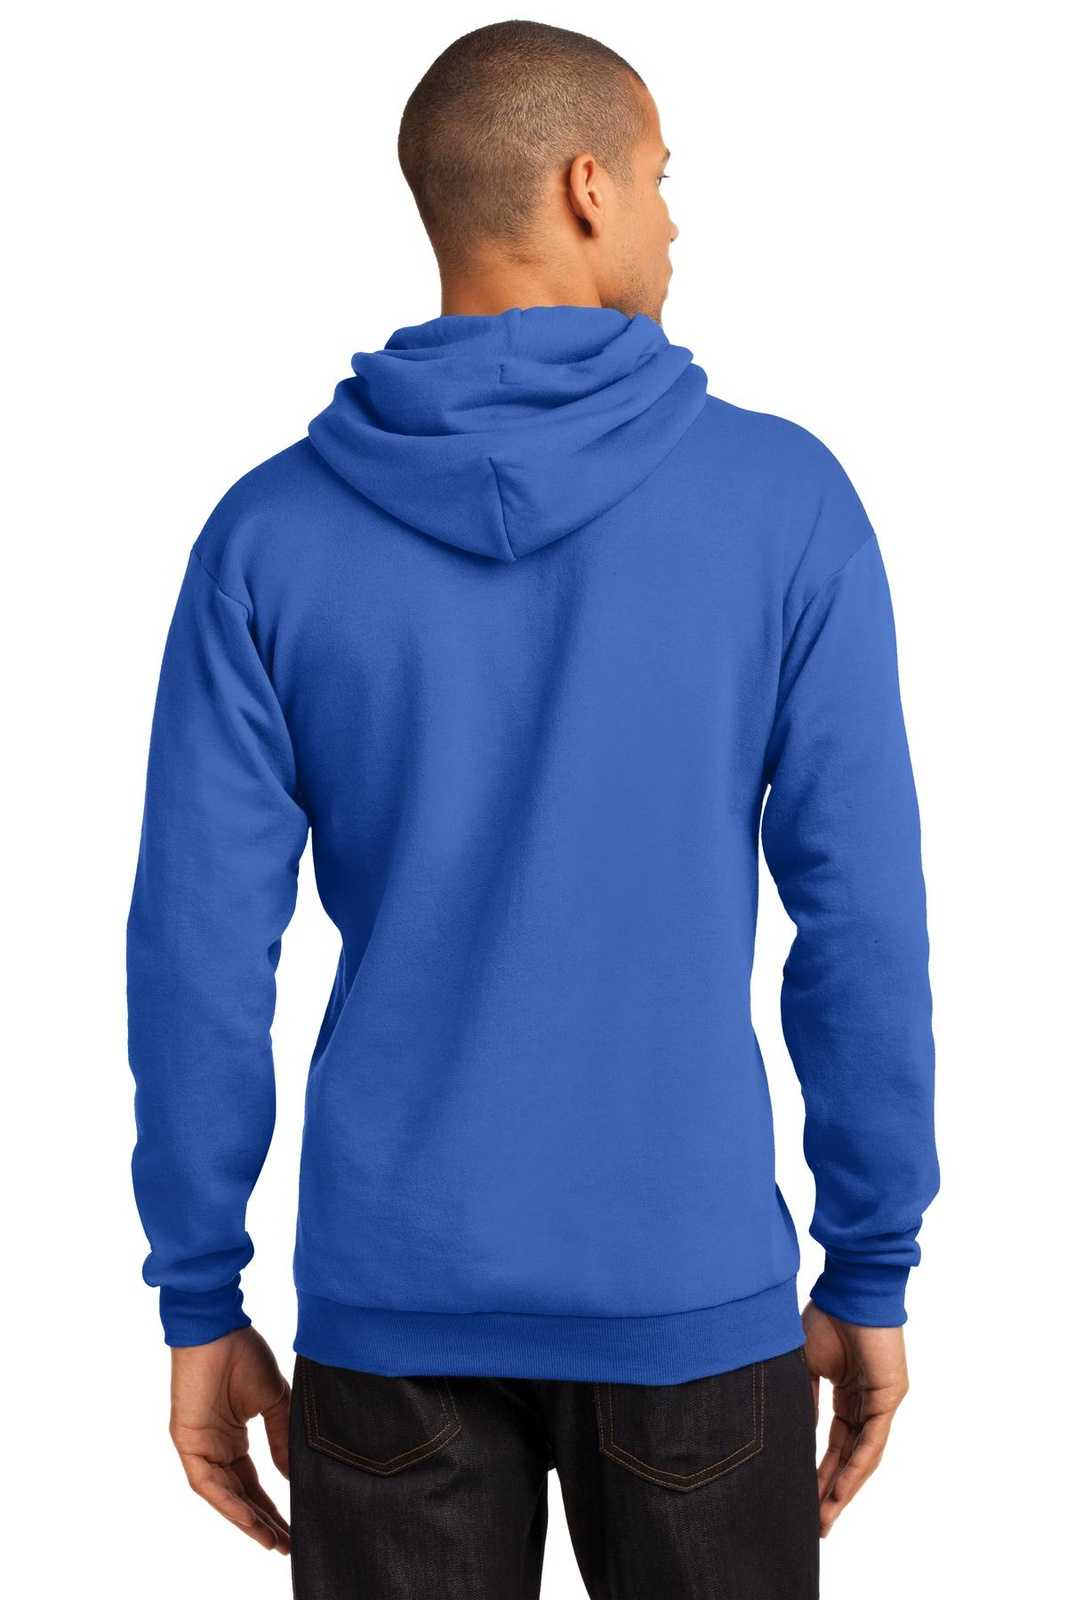 Port & Company PC78H Core Fleece Pullover Hooded Sweatshirt - Royal - HIT a Double - 1